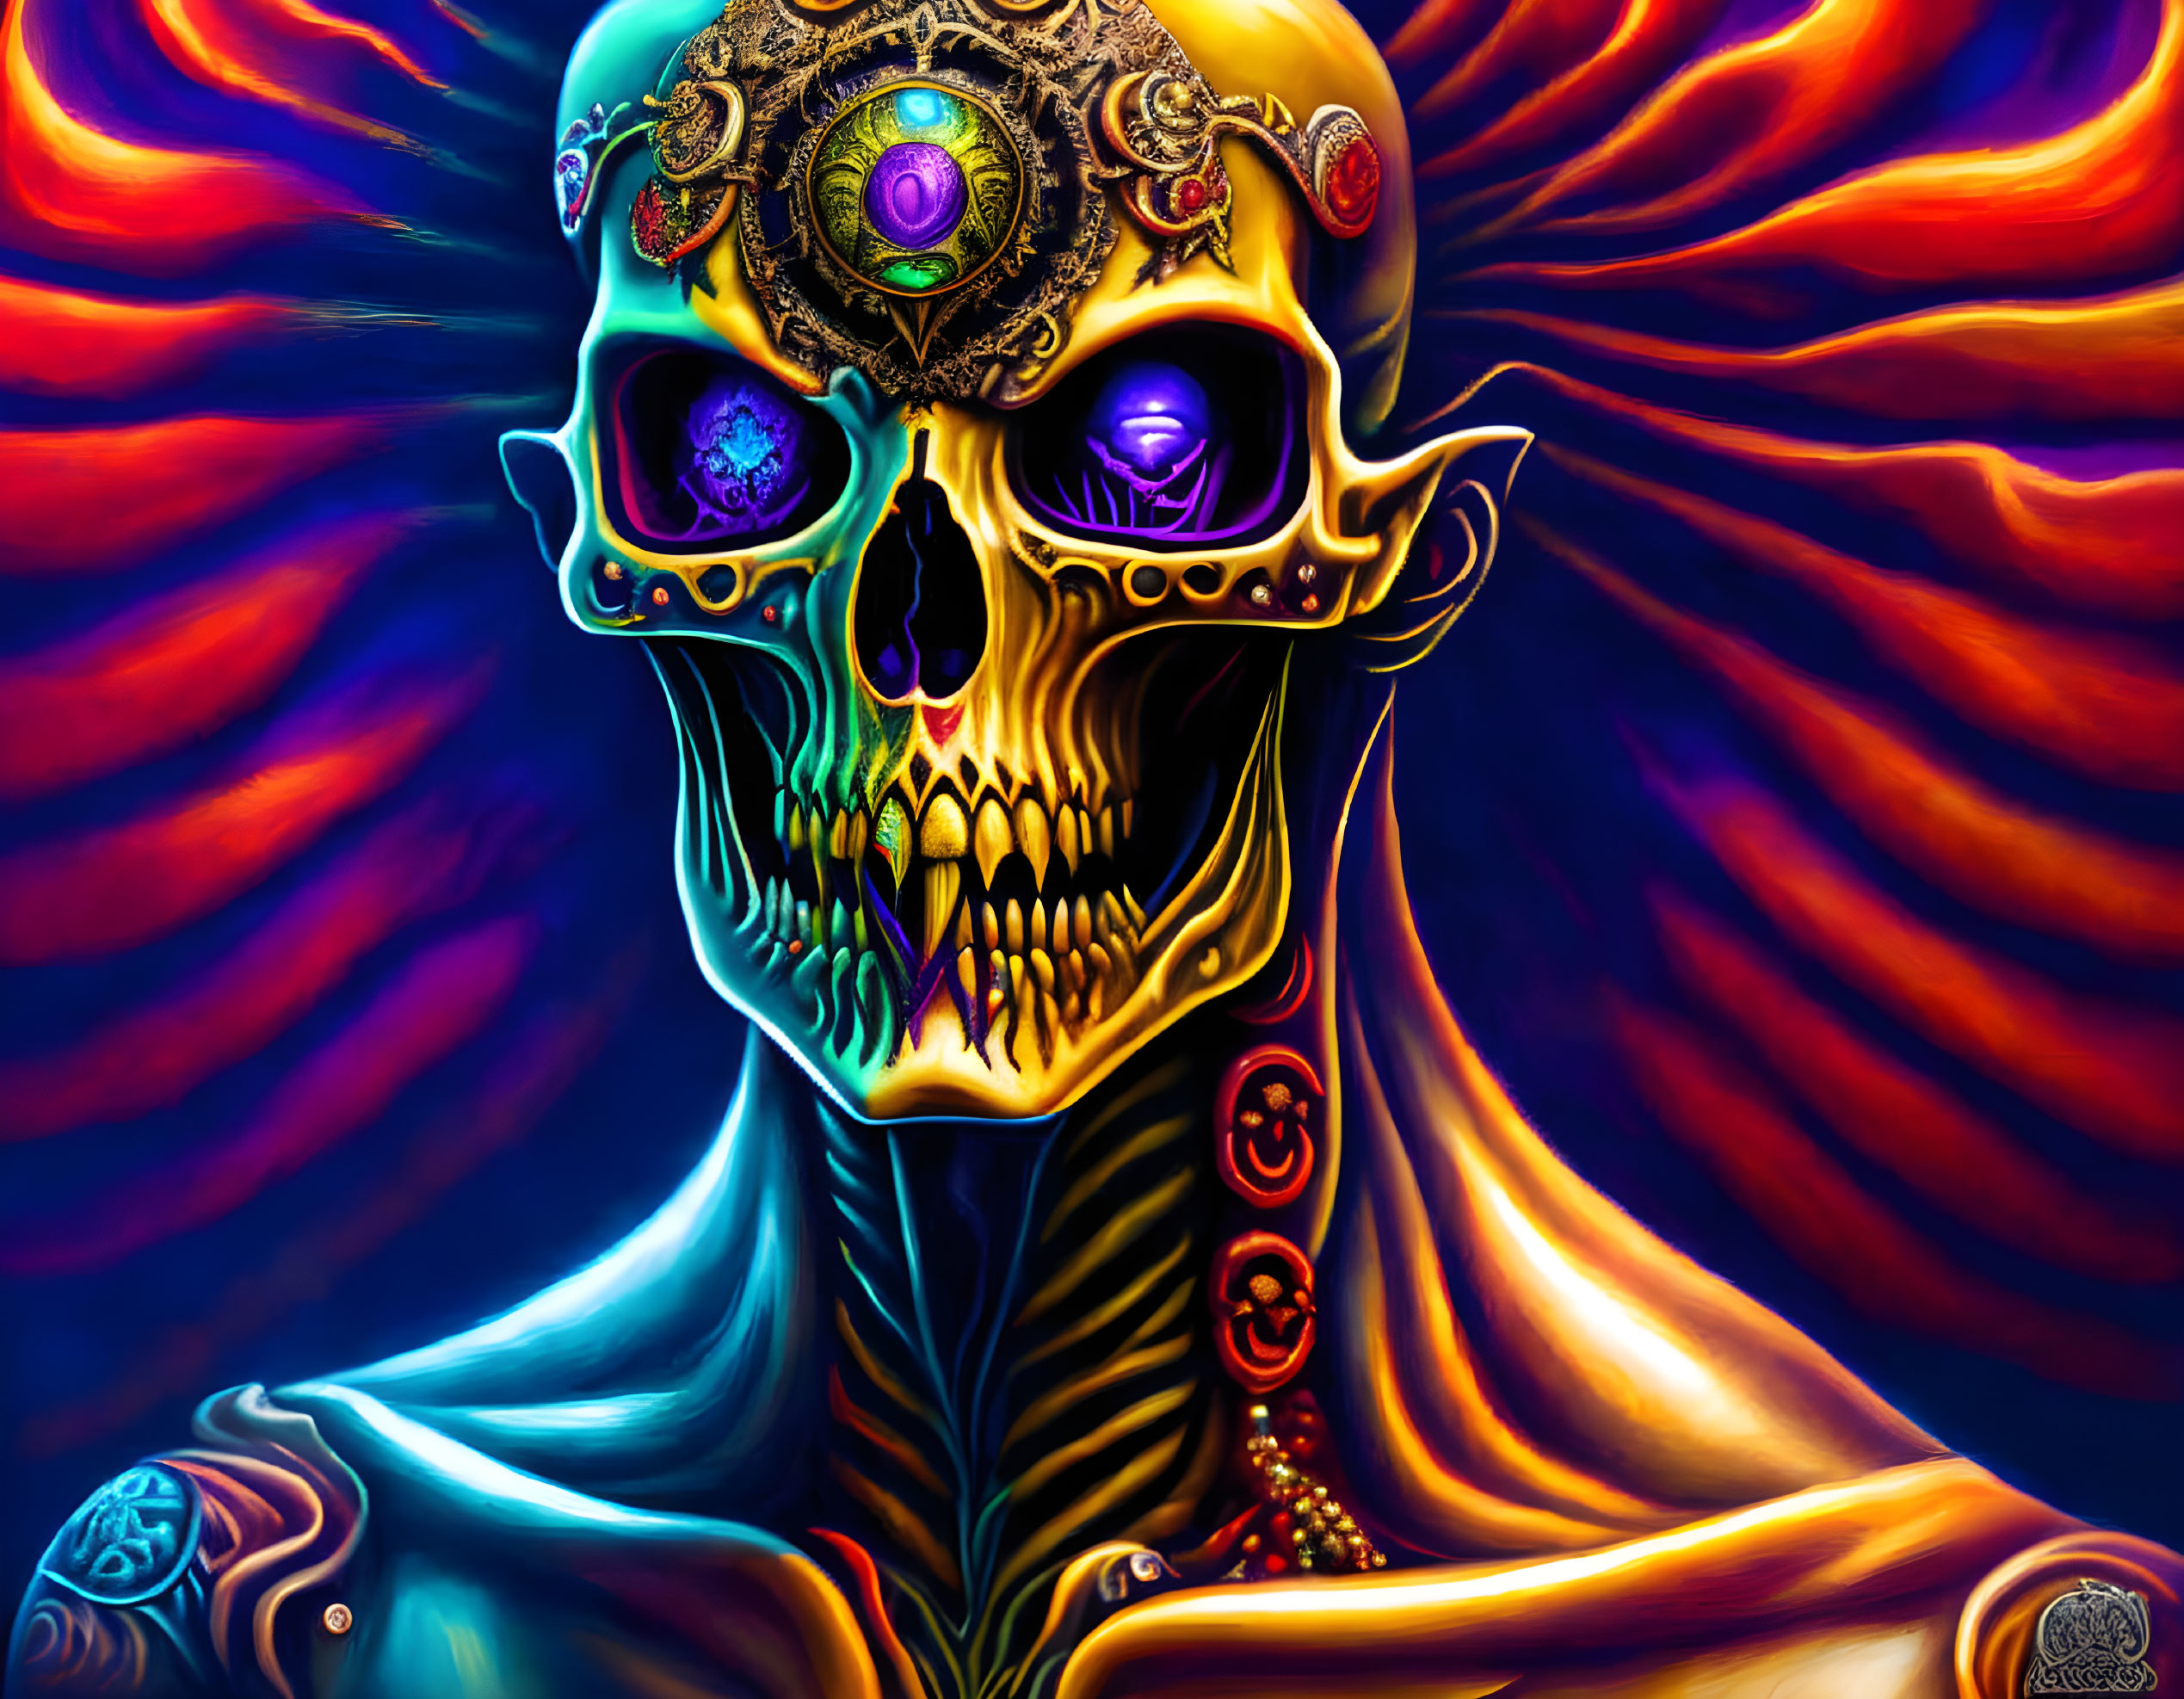 Vibrant digital art: Skull with gemstone eyes & ornate designs